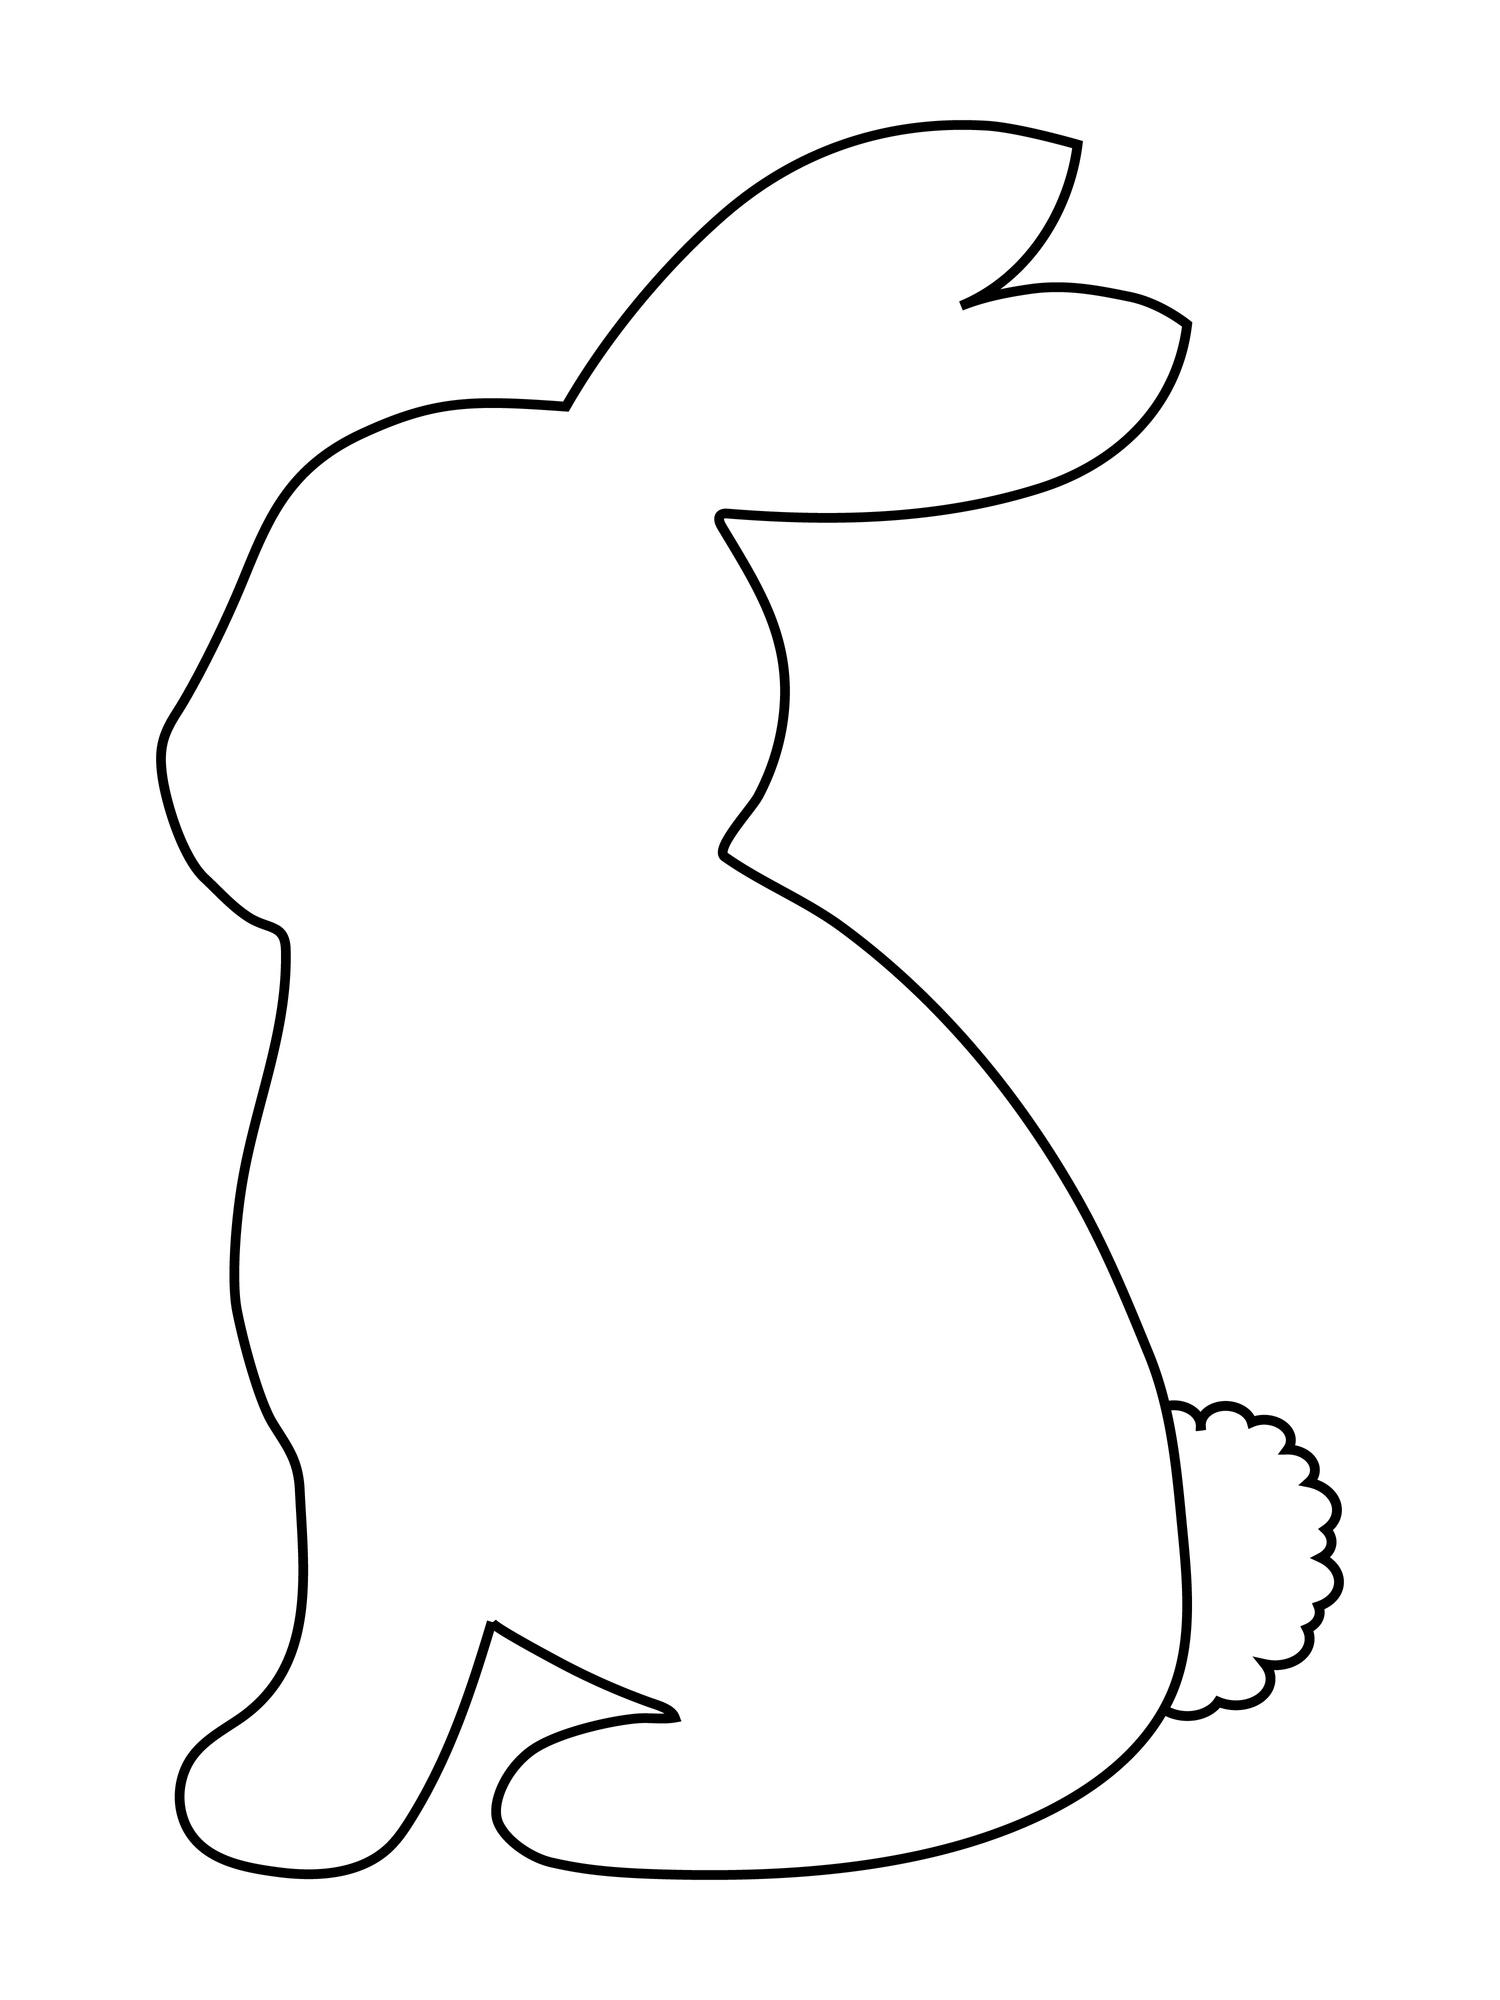 Bunny or Rabbit silhouette in black outline. Vector illustration